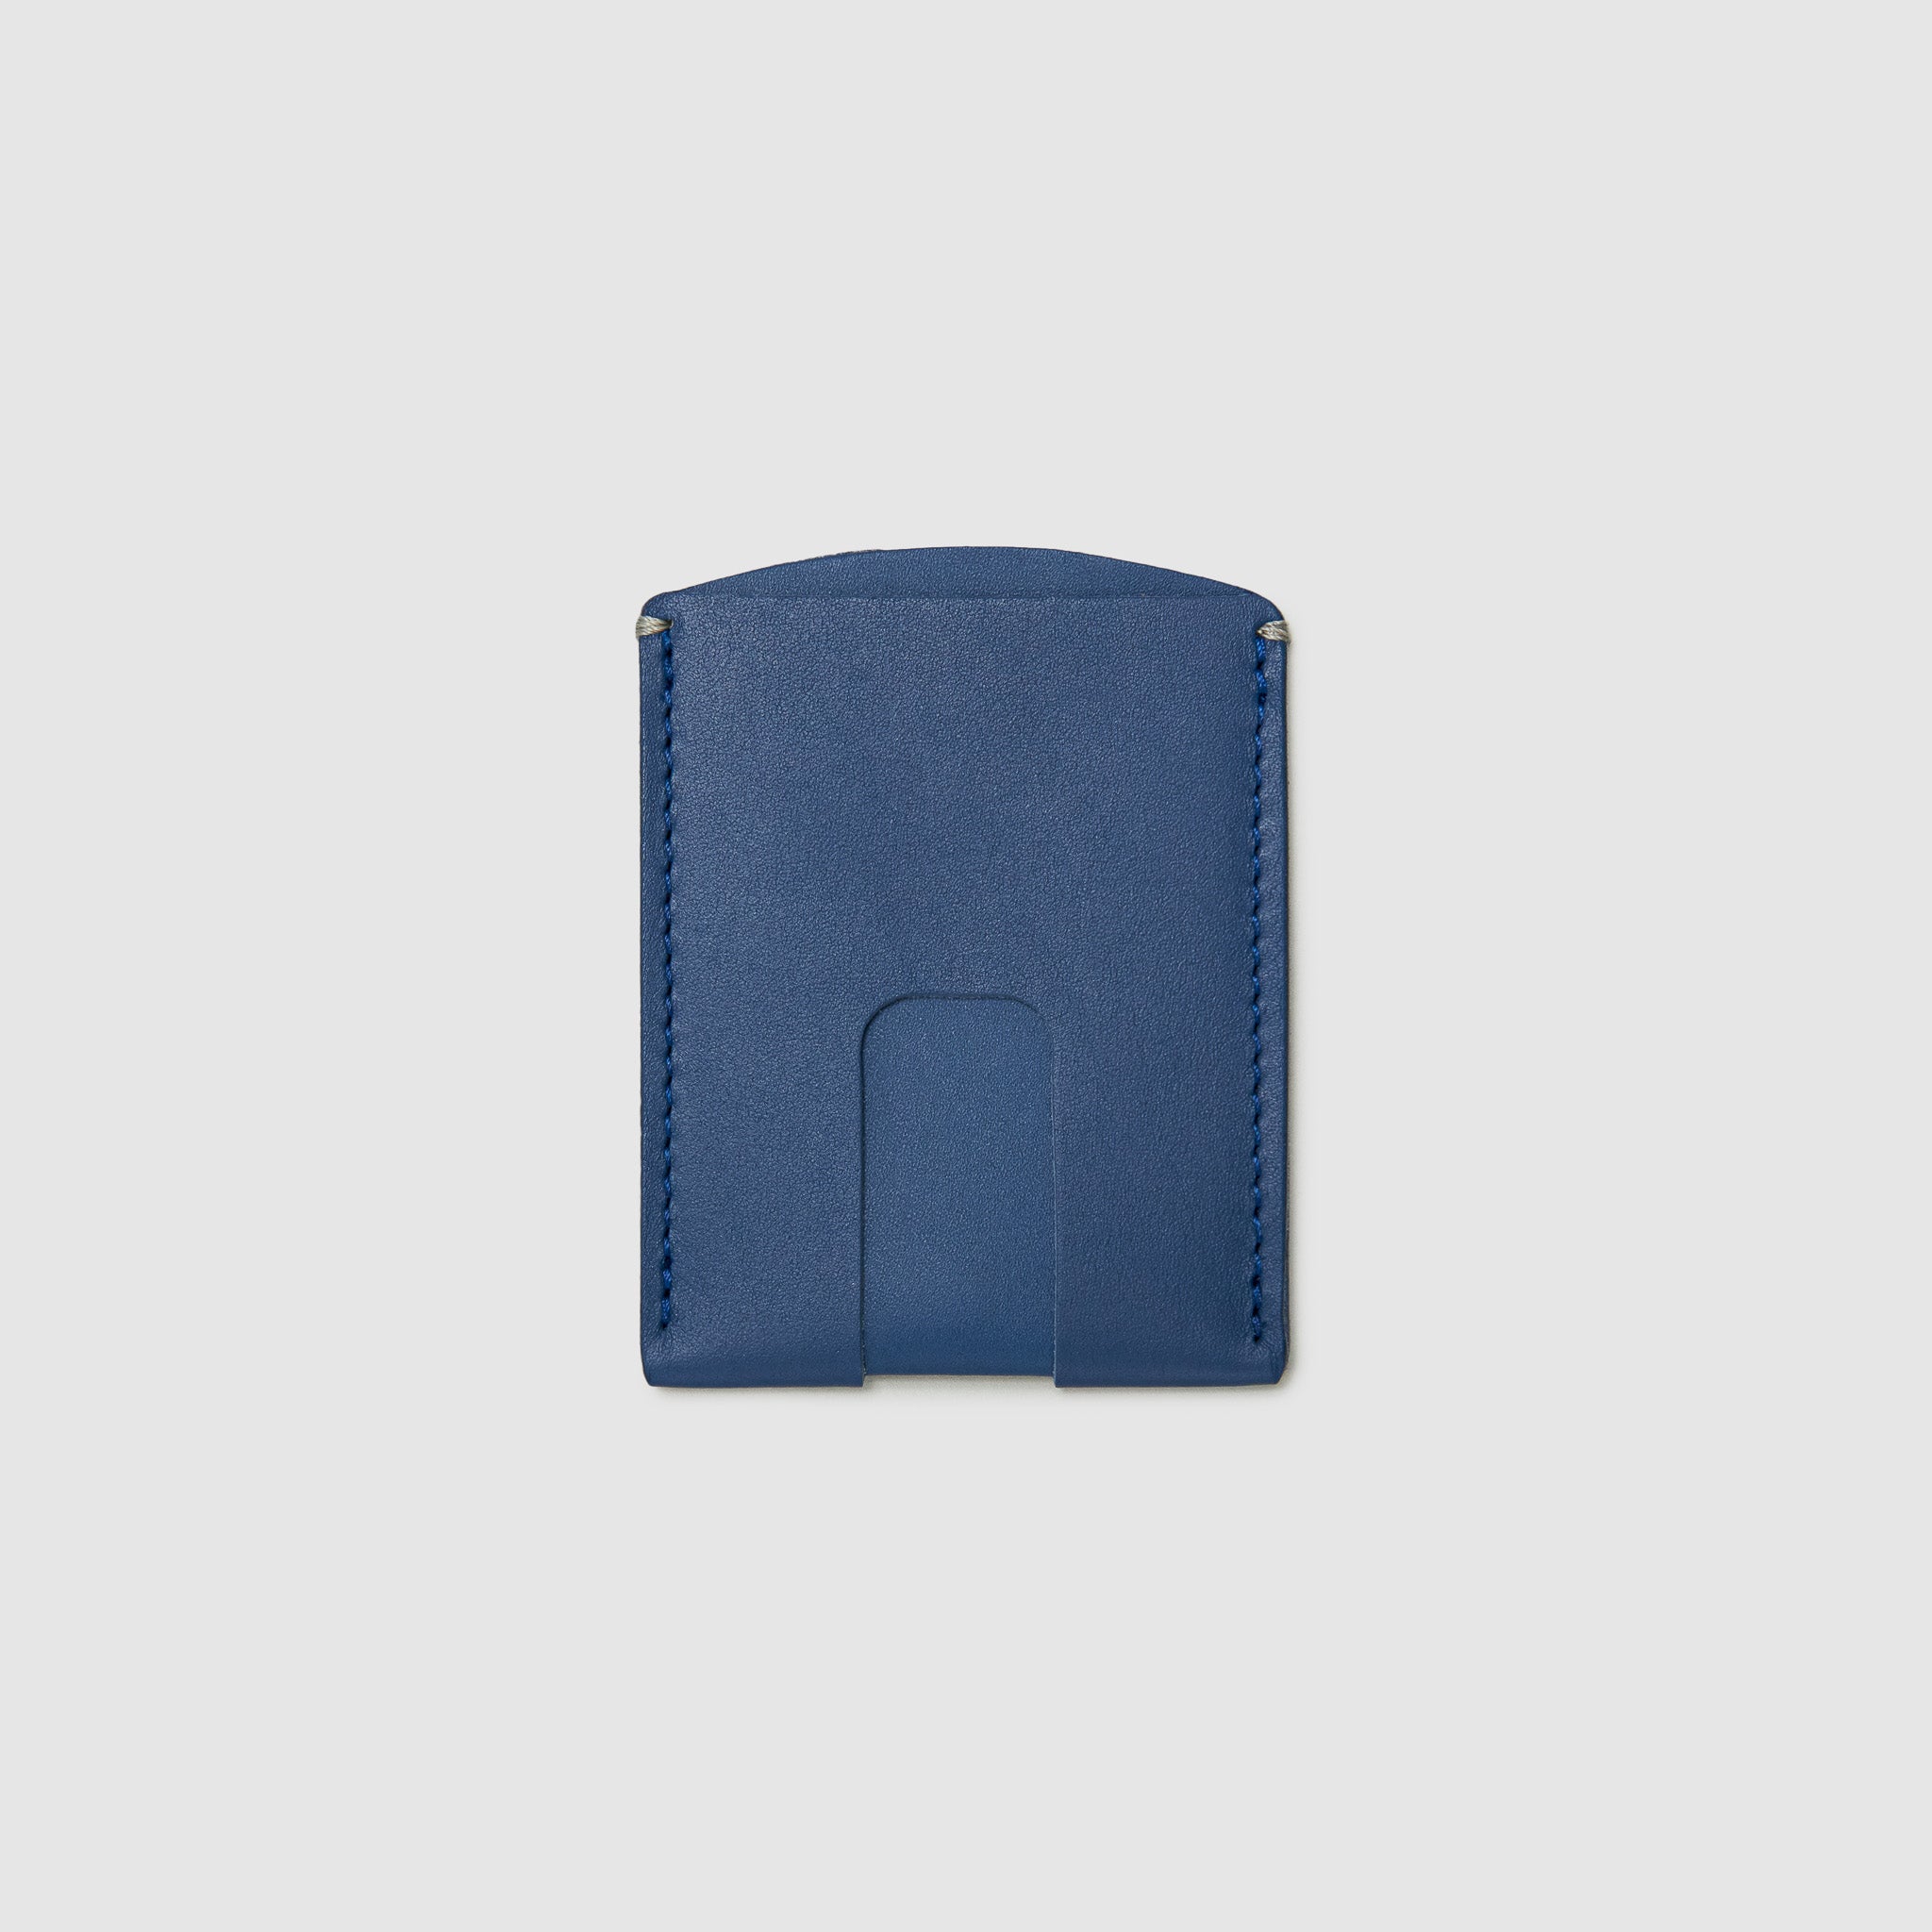 Anson Calder Card Holder Wallet french calfskin leather with cash slot _cobalt